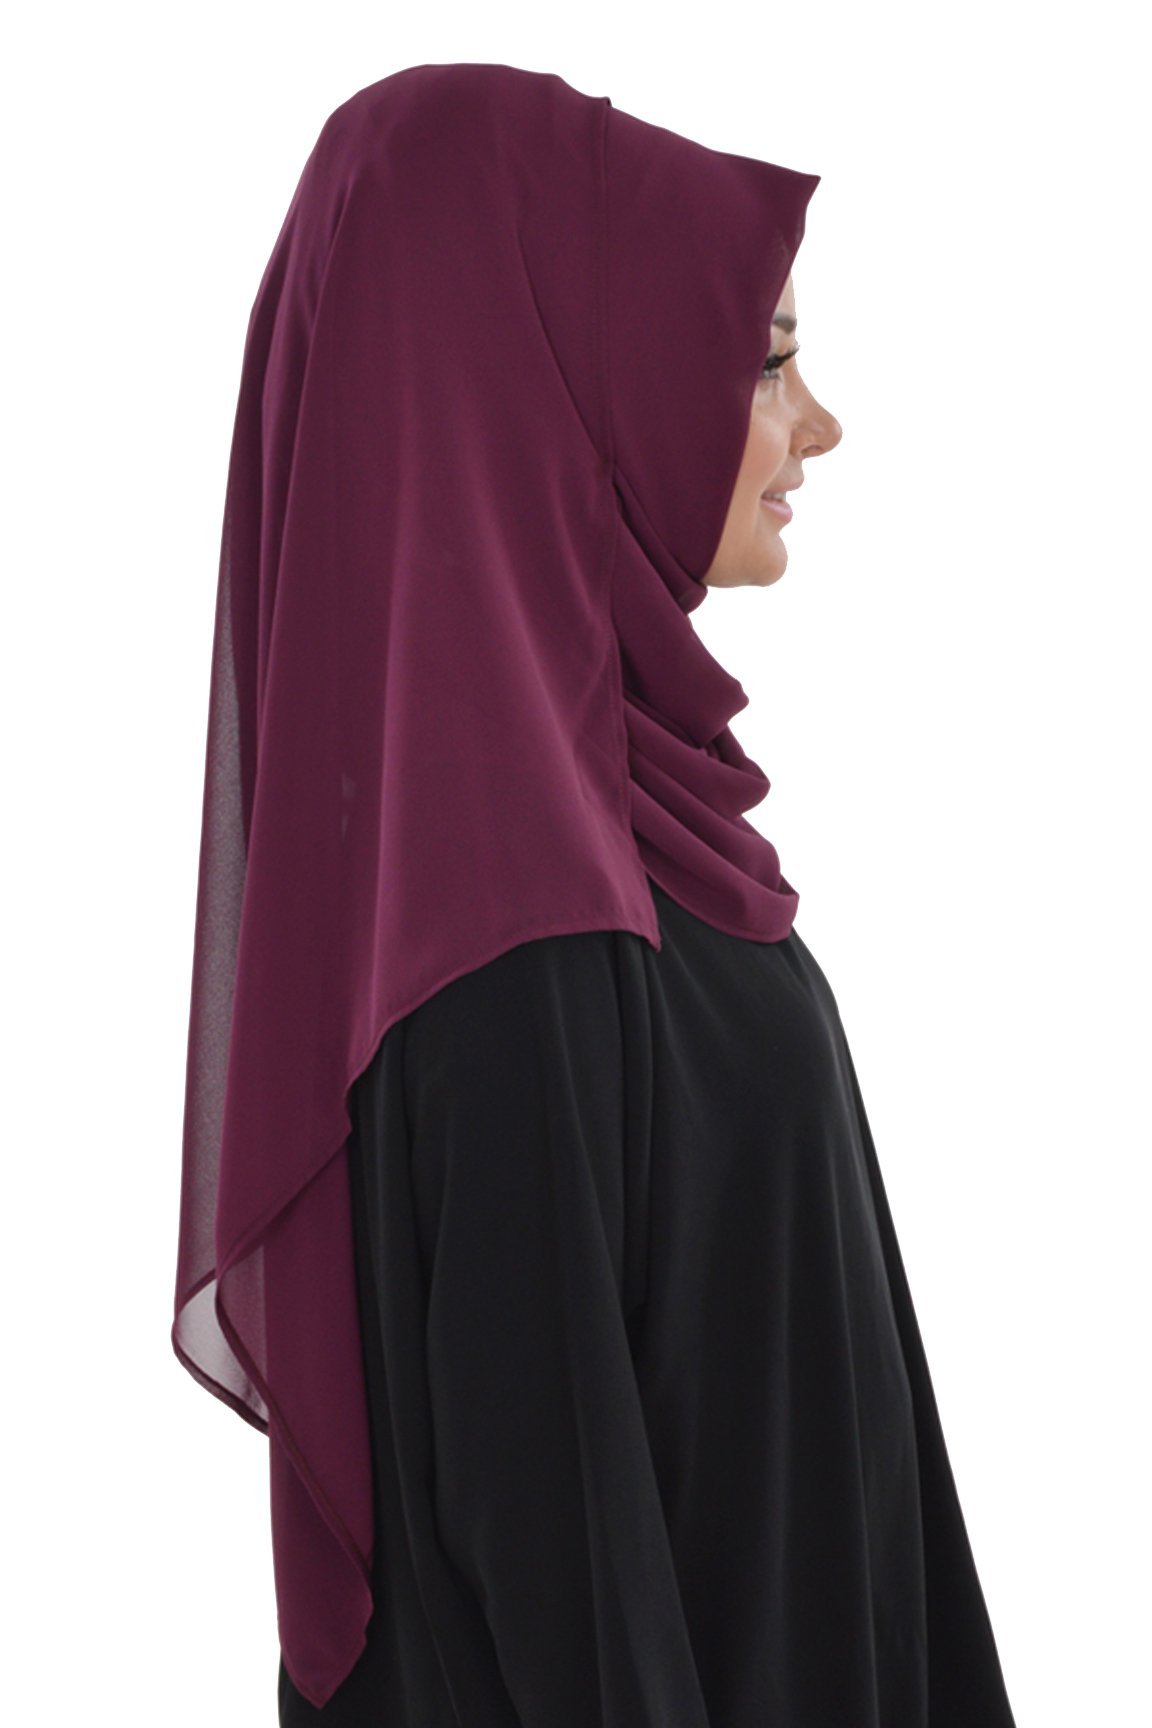 TesetturVeModa Amirah hijab Practical Instant Chiffon Hijab Shawl Plum - Modefa 